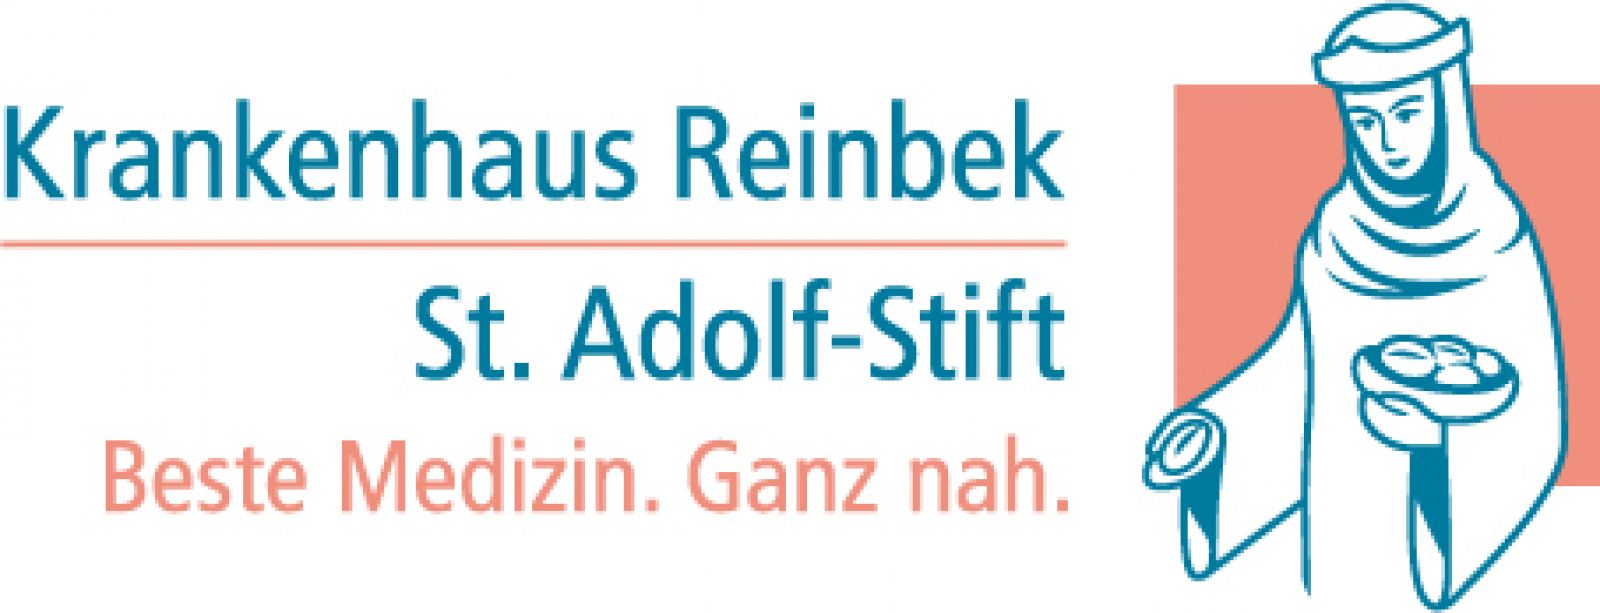 Kh Sankt Adolf Stift Reinbek Logo 2017 L Rgb